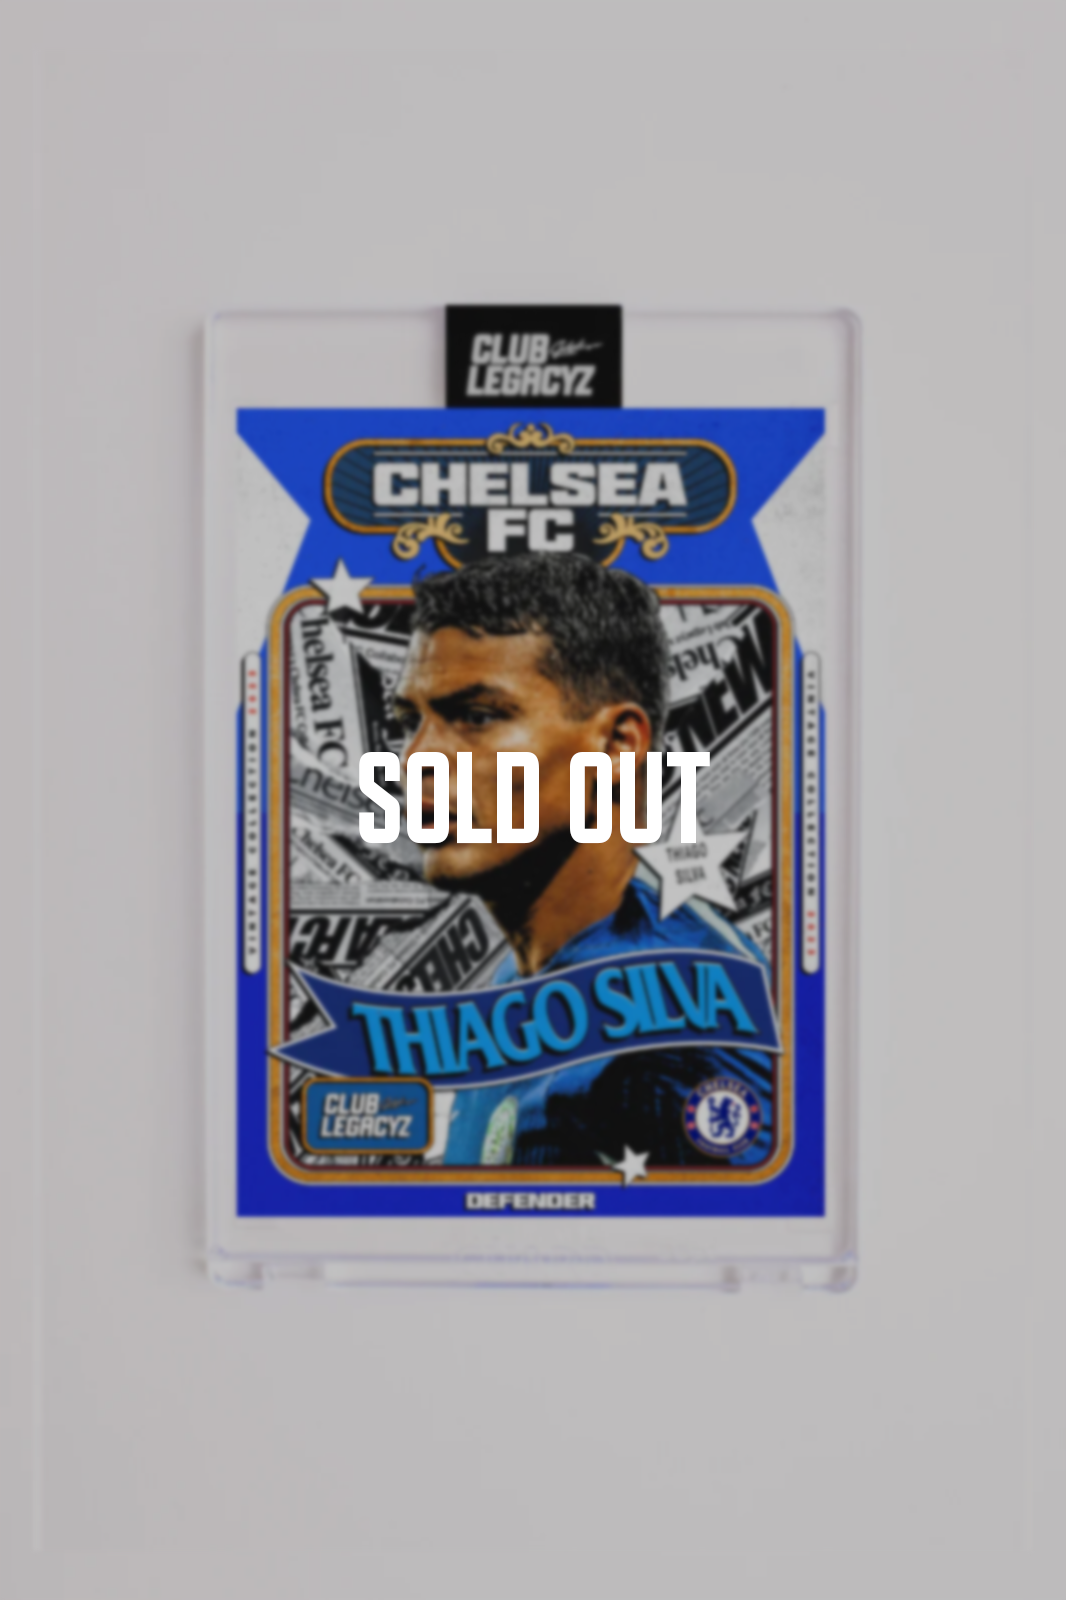 Chelsea FC - Thiago Silva Retro Icon limited to 100